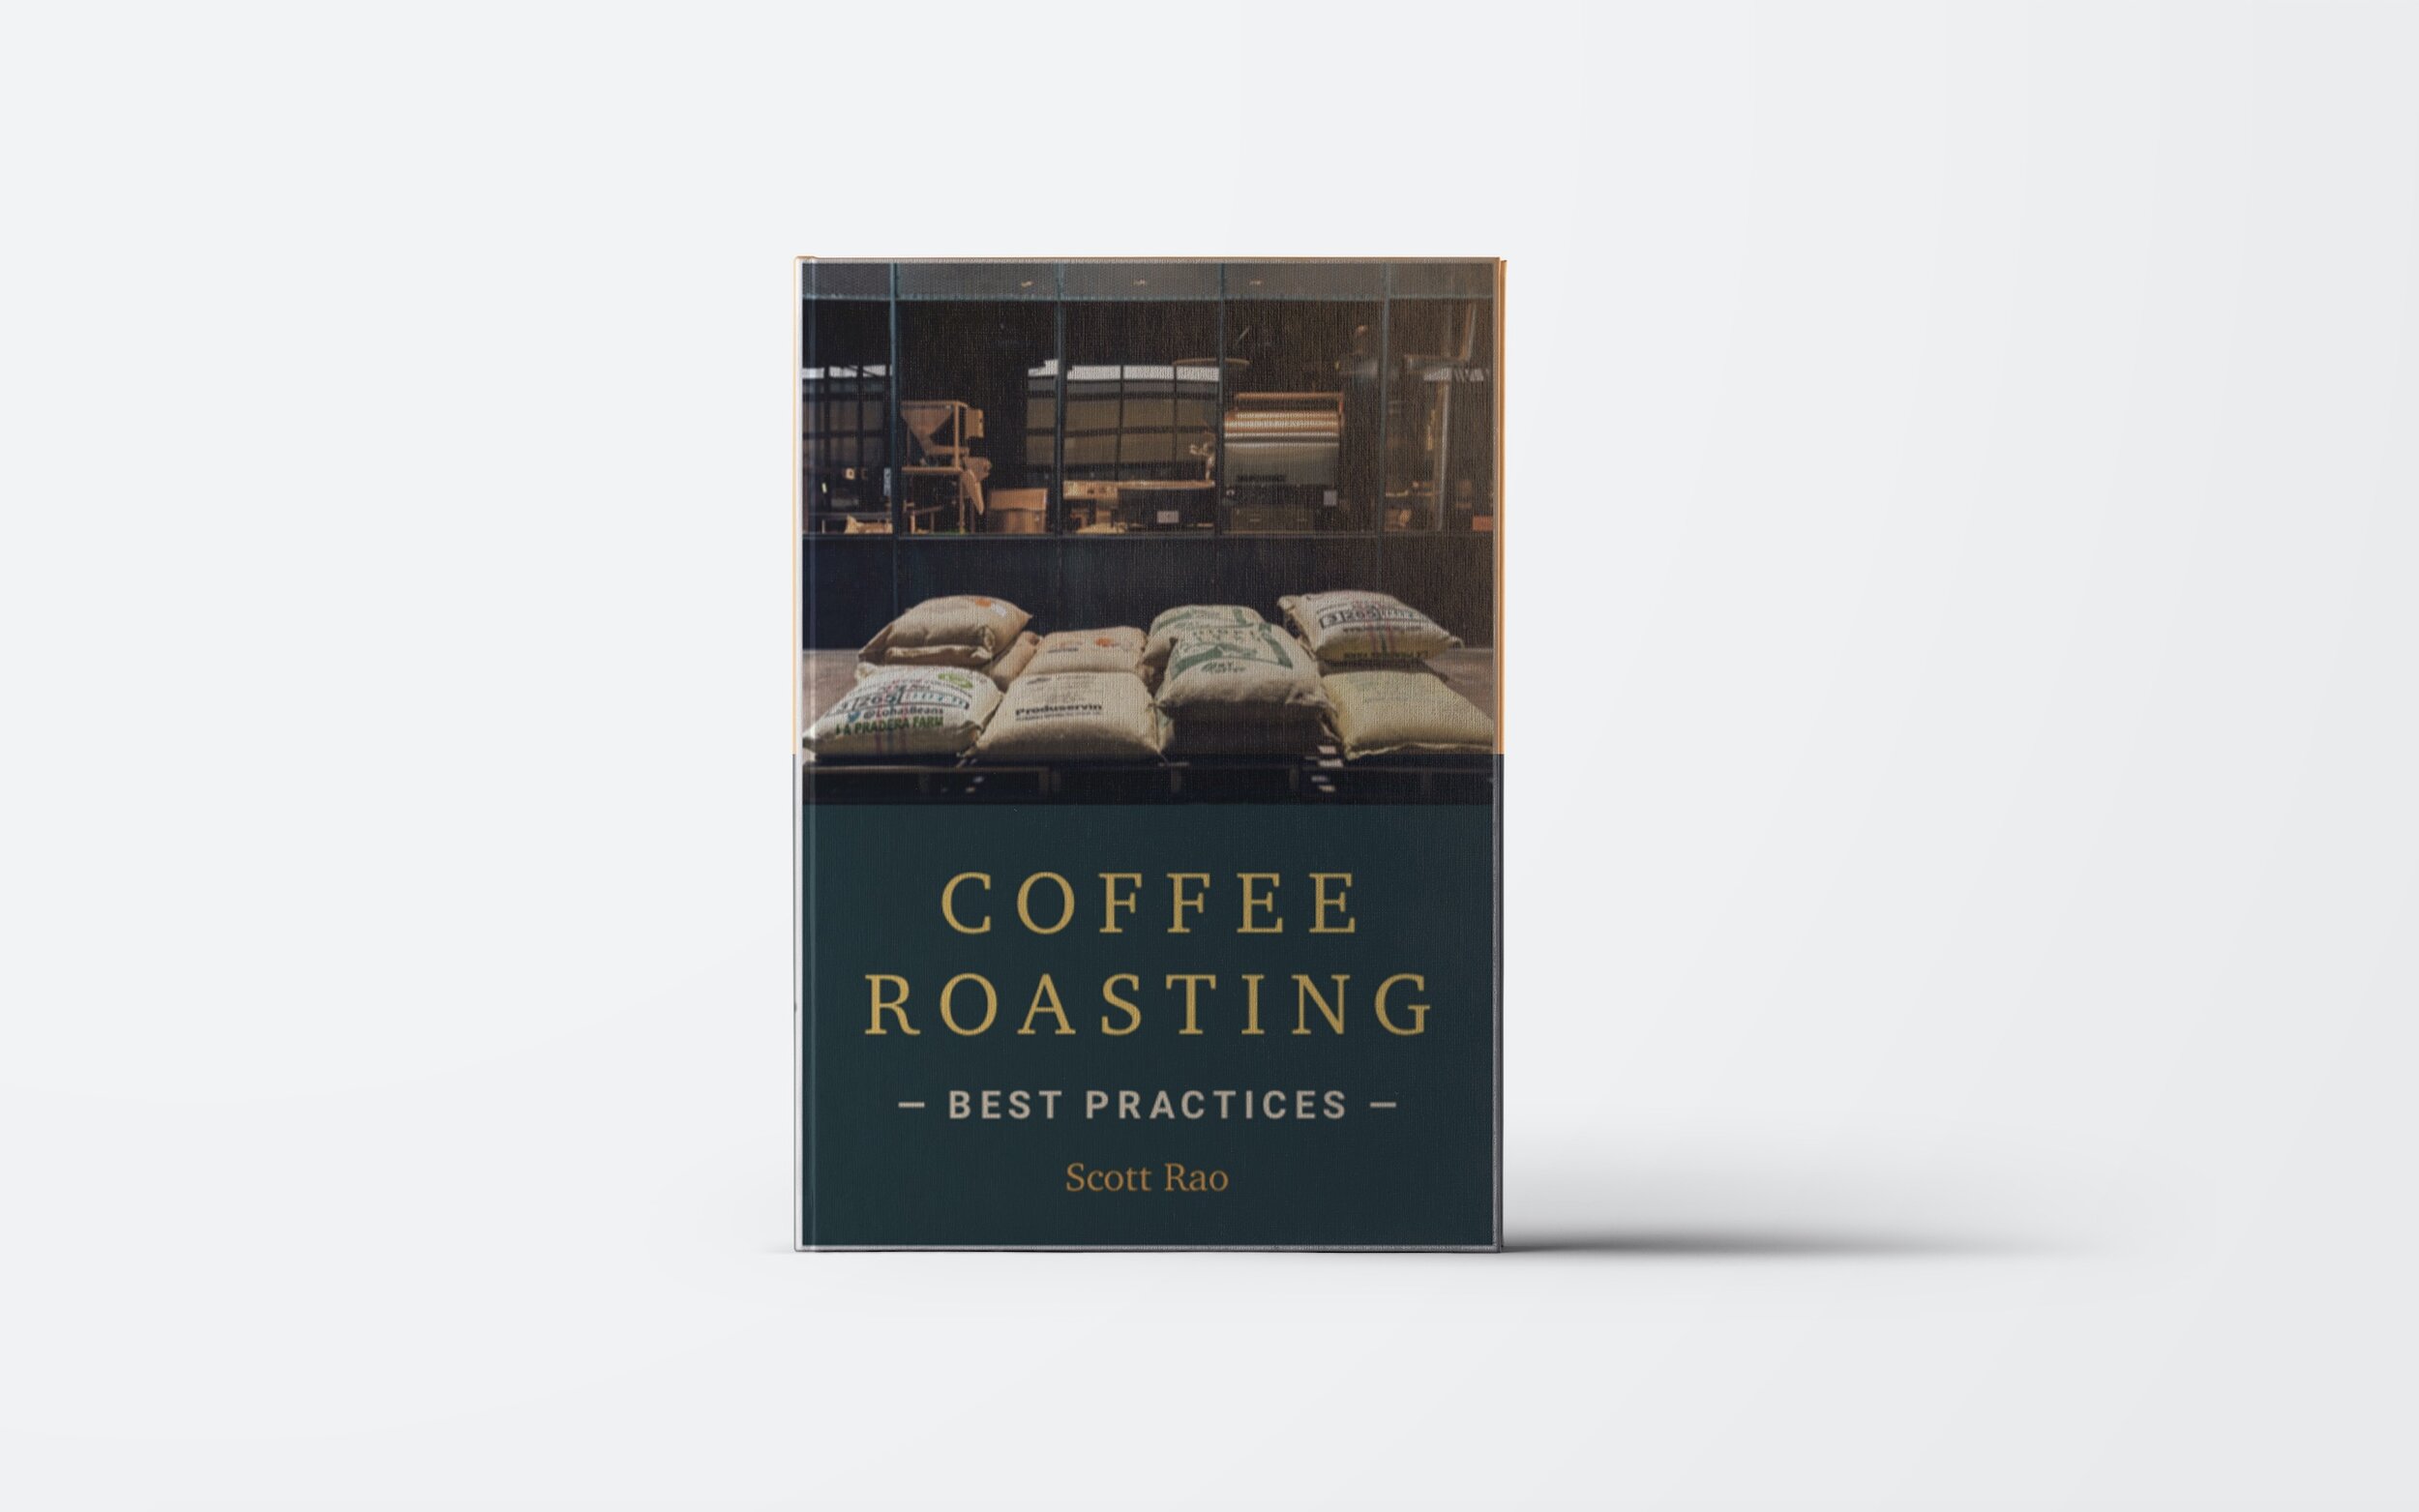 Coffee Roasting Best Practices by Scott Rao